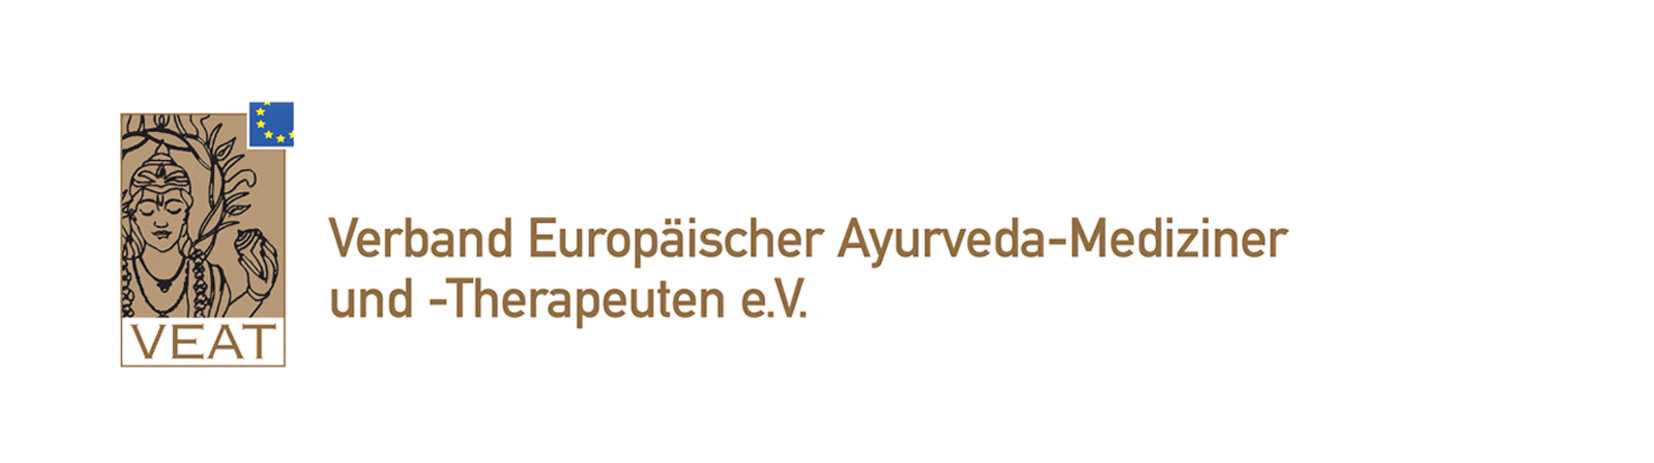 ayurveda-portal-logo-veat_verband